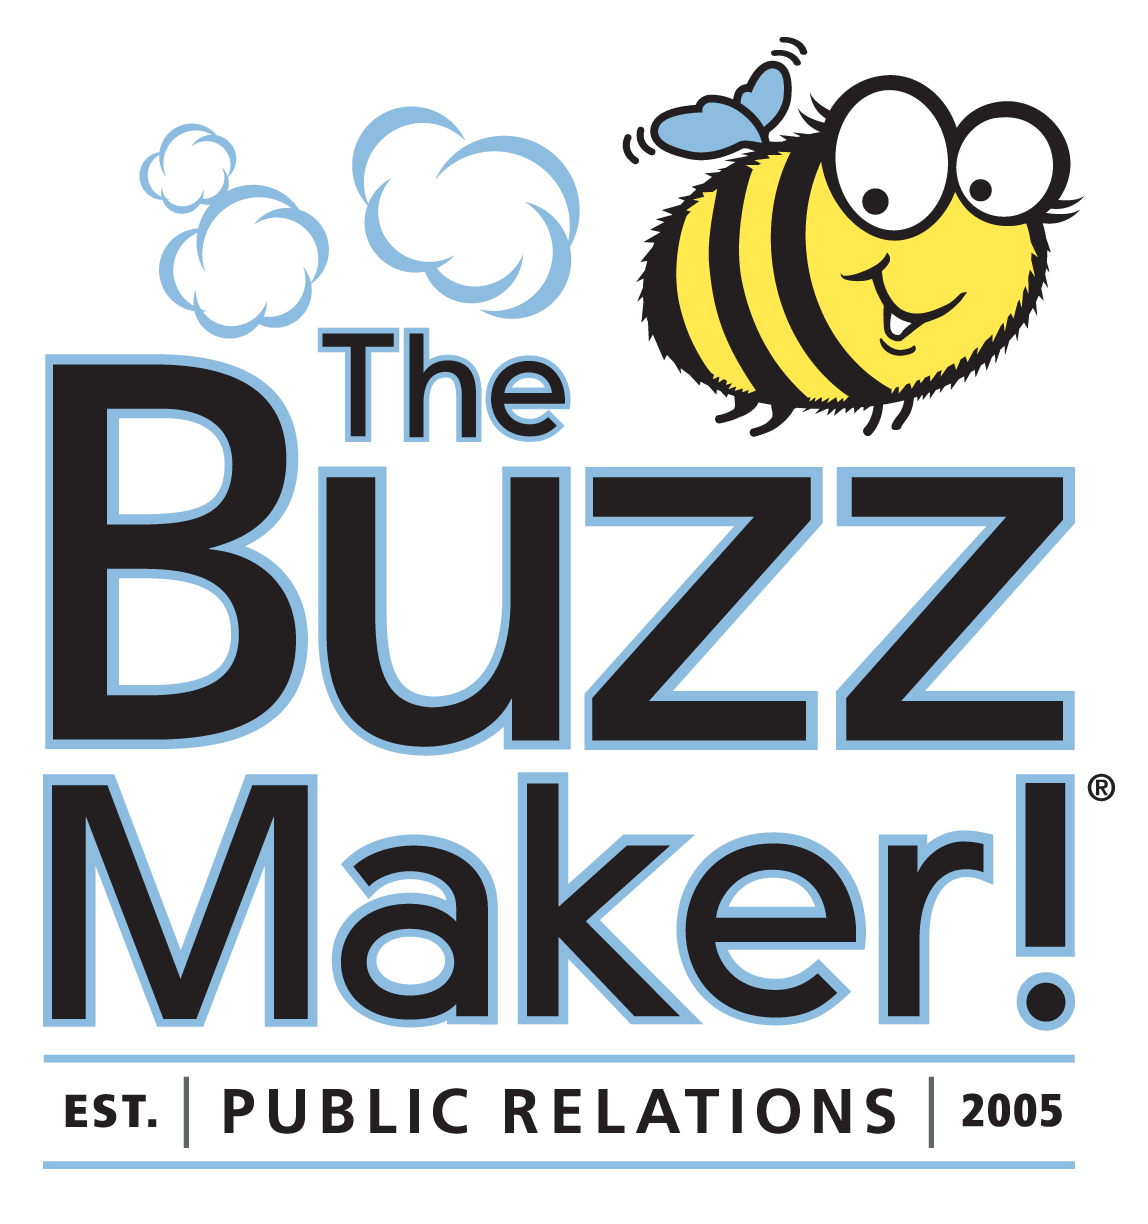 The Buzz Maker Public Relations